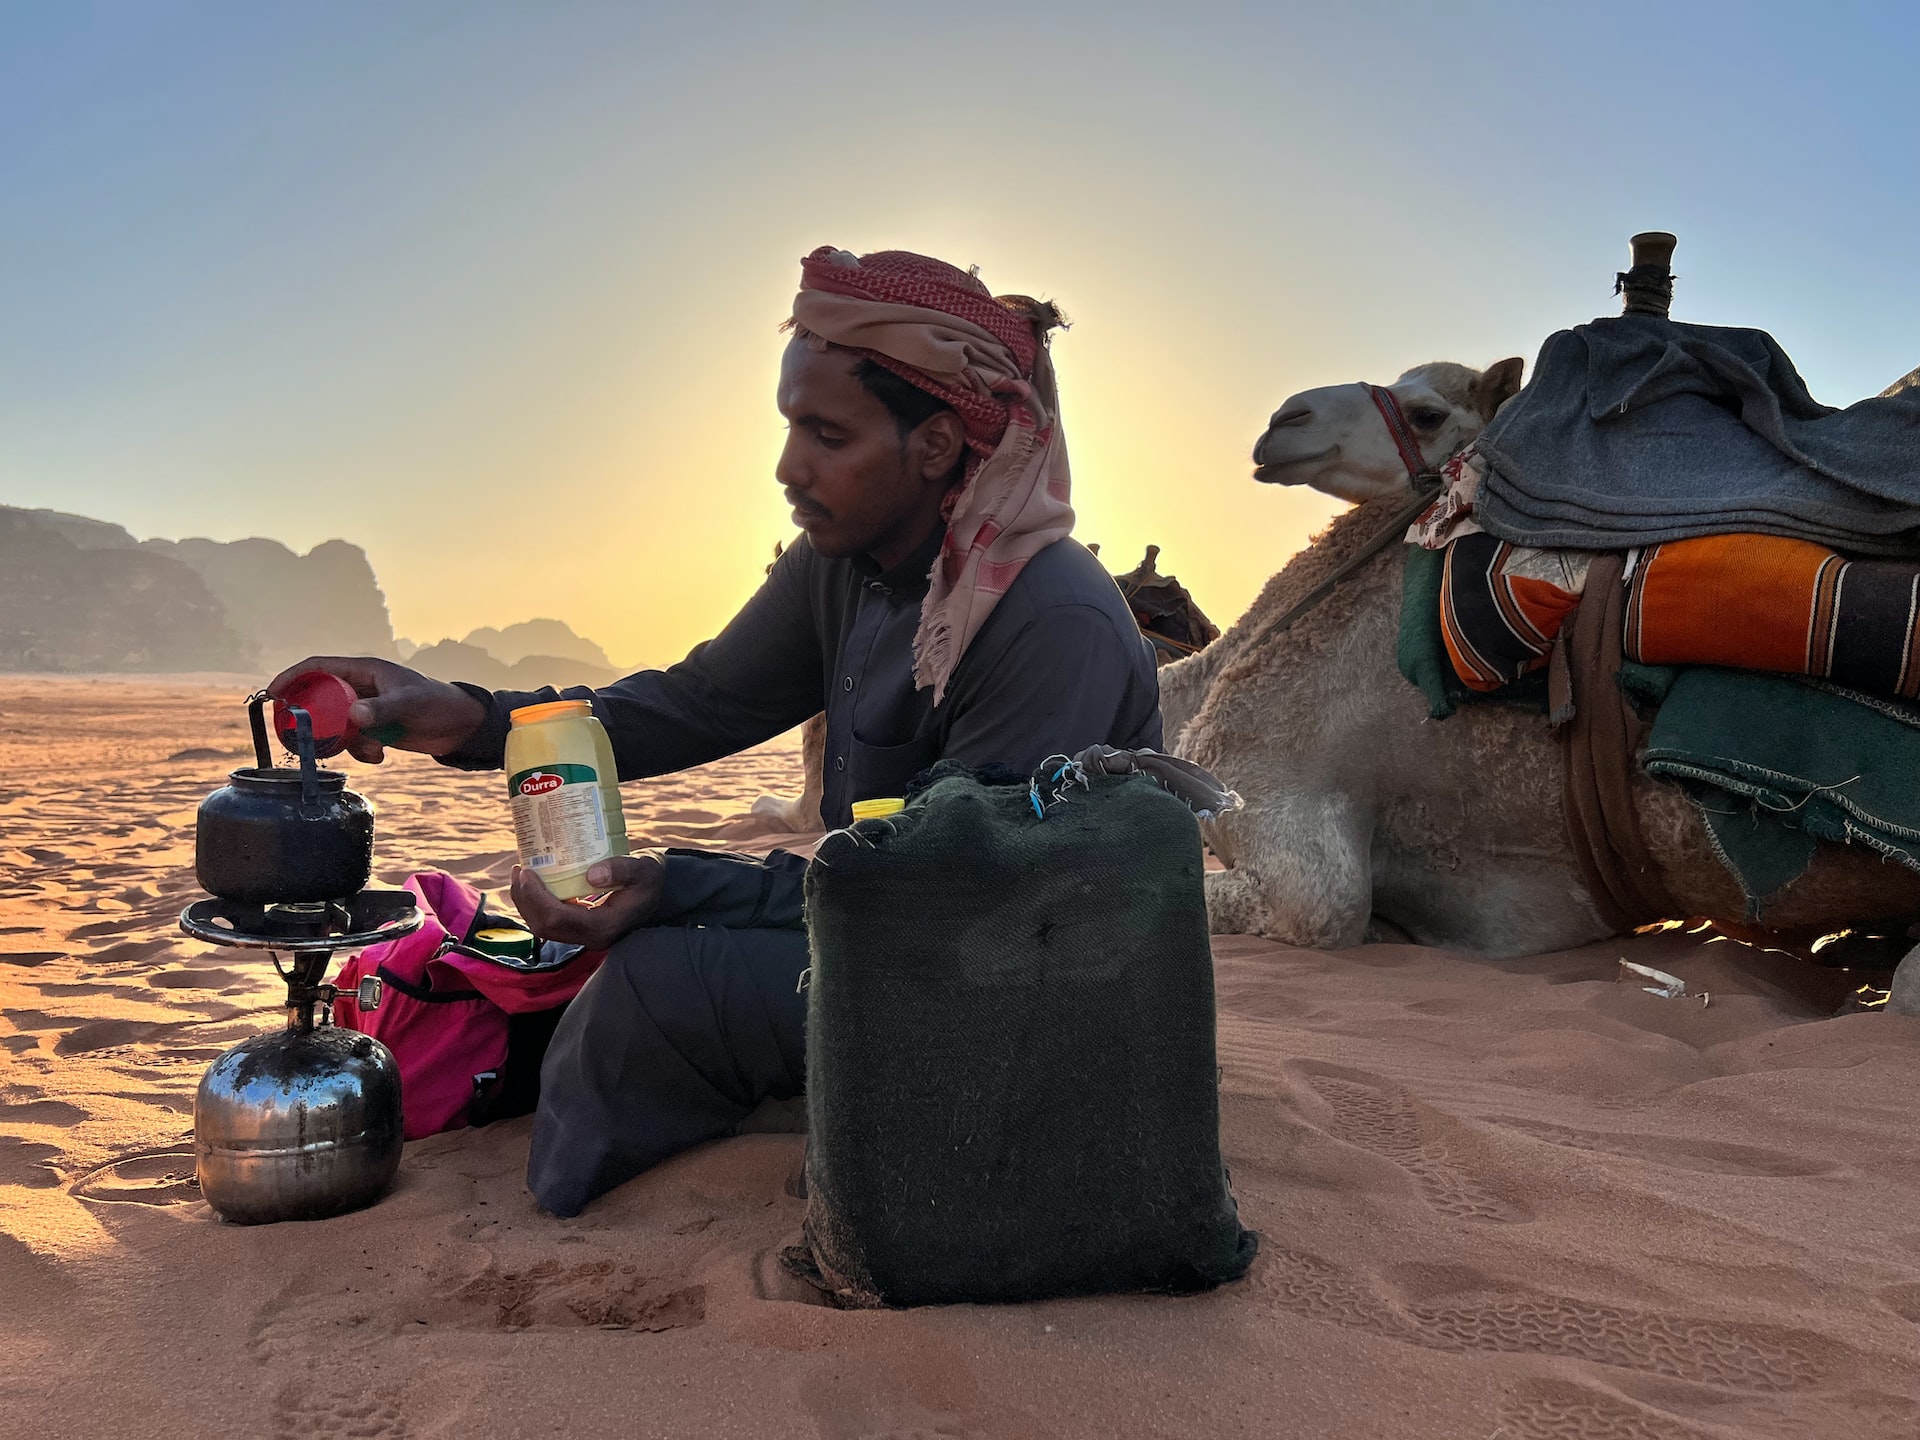 Movies Filmed in Wadi Rum- A Bedouin making morning coffee in Wadi Rum